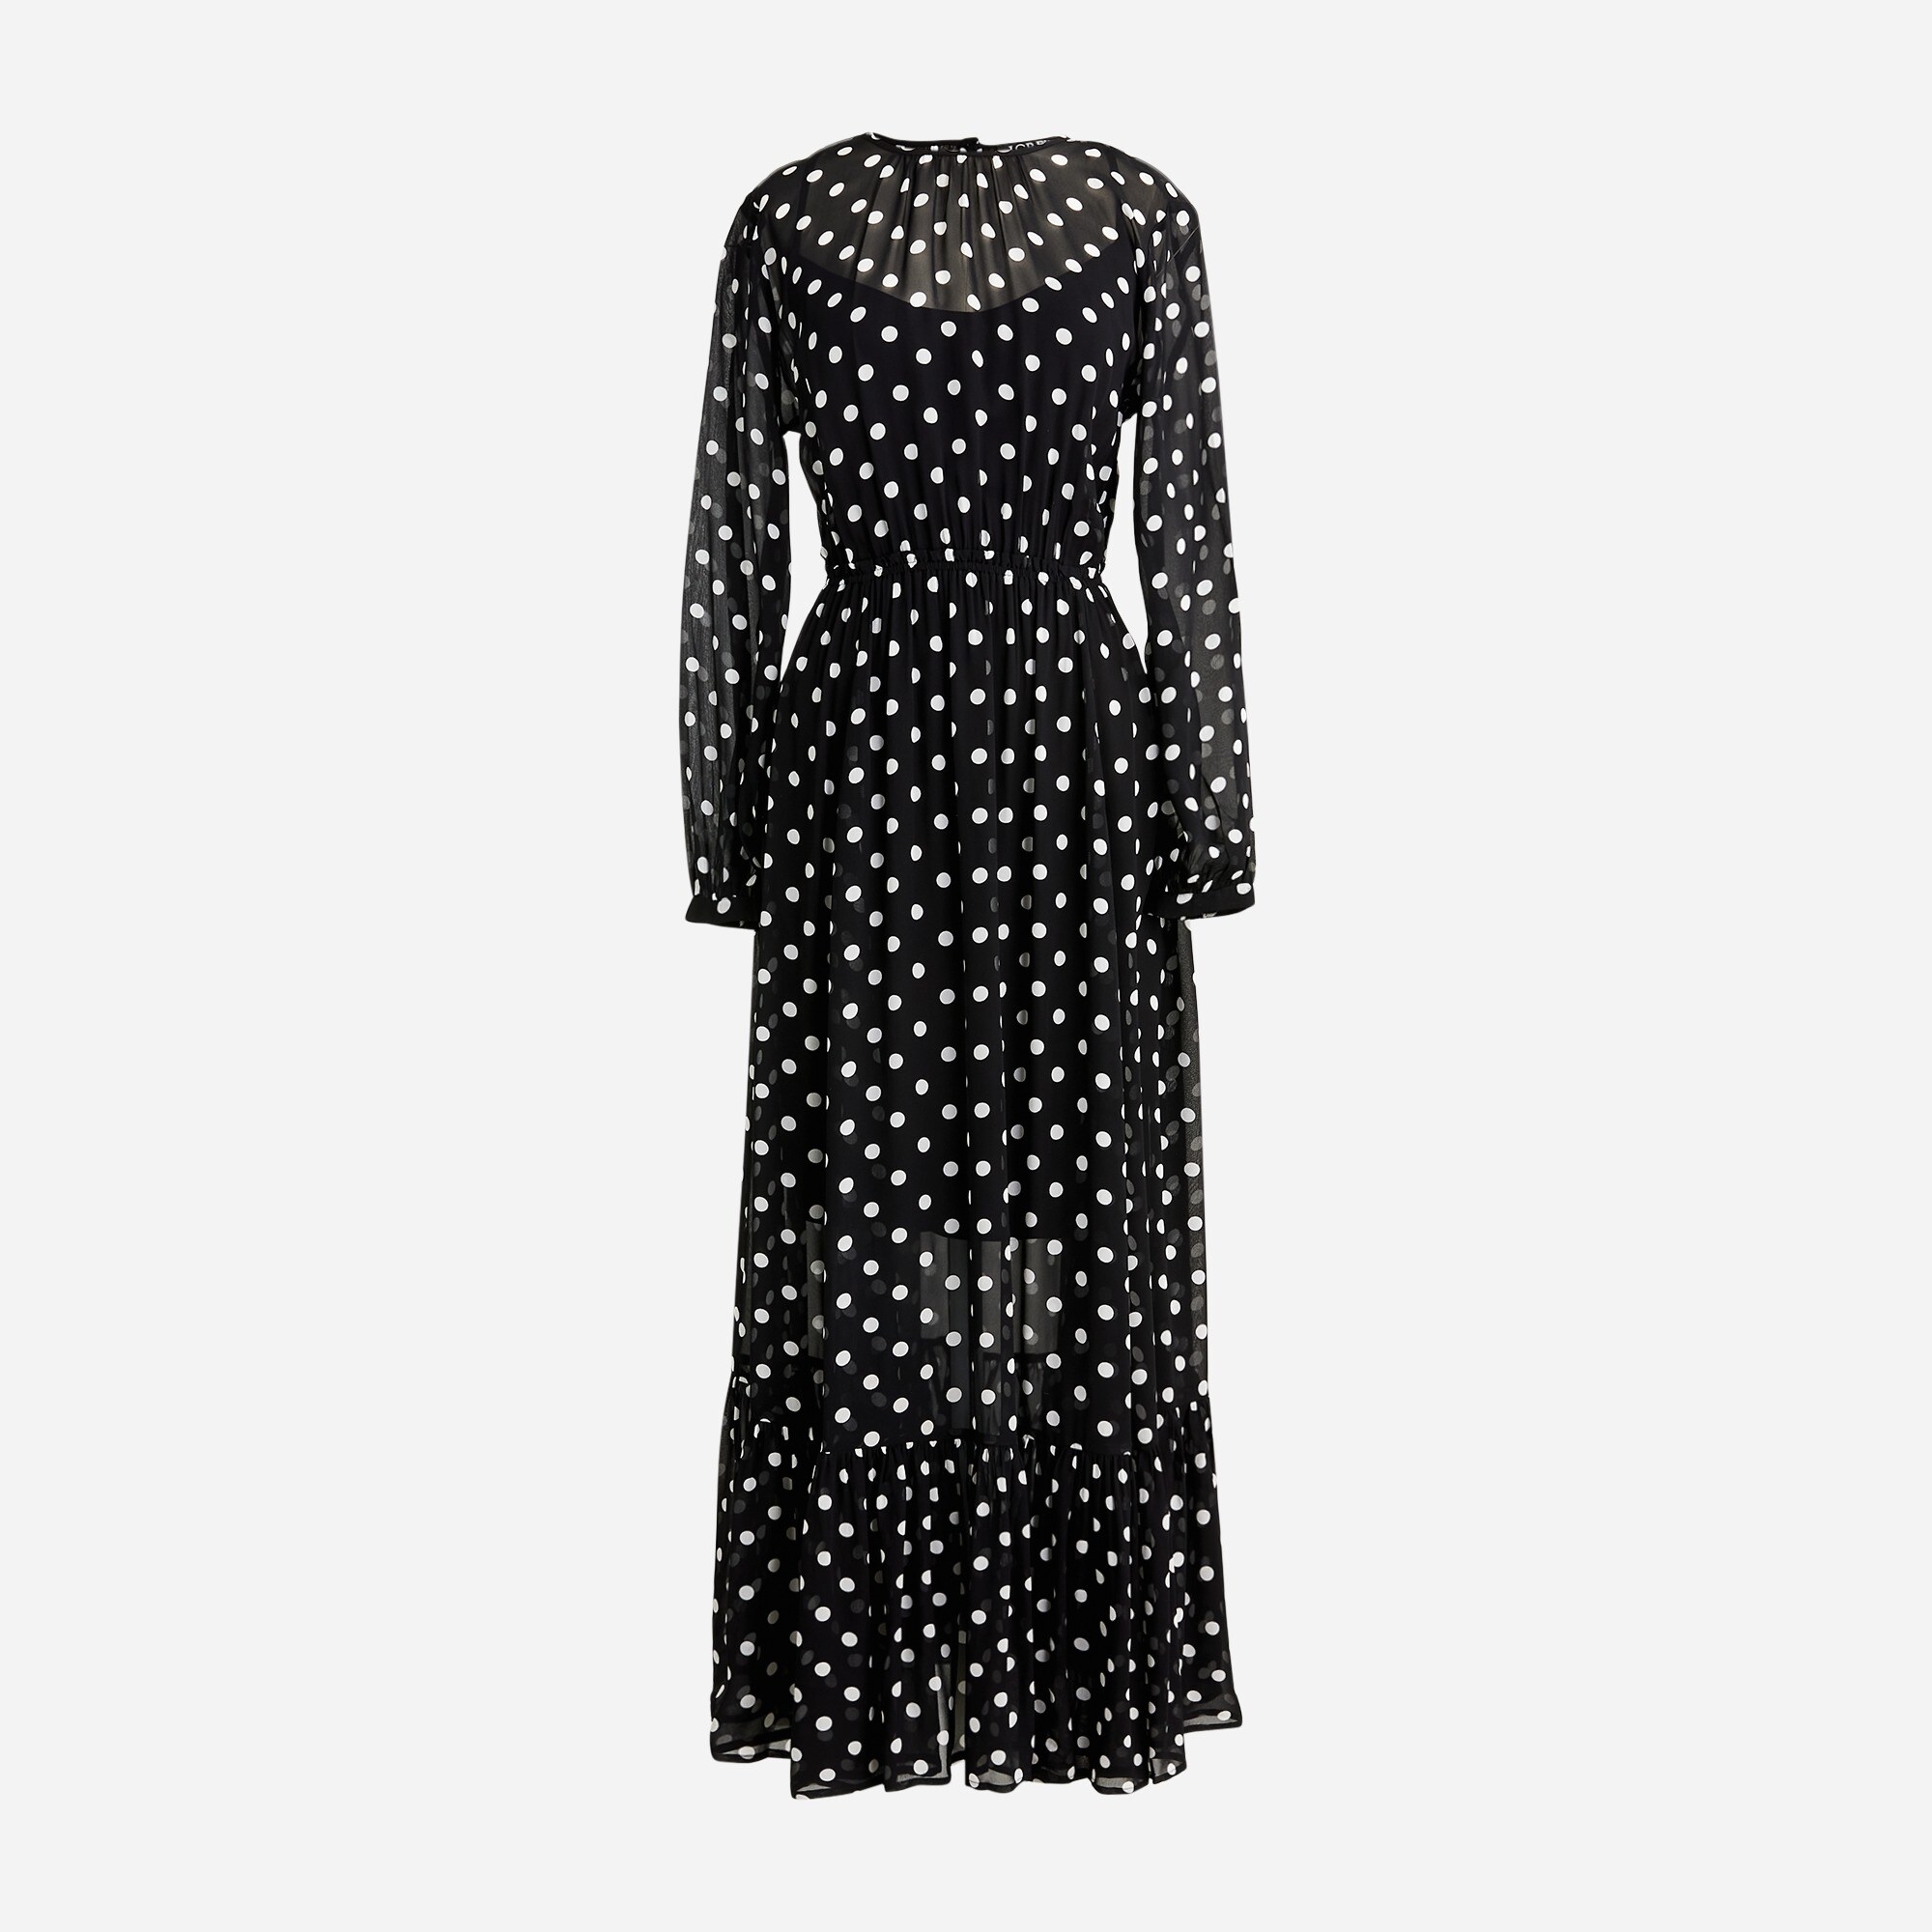  Long-sleeve chiffon midi dress in dot print